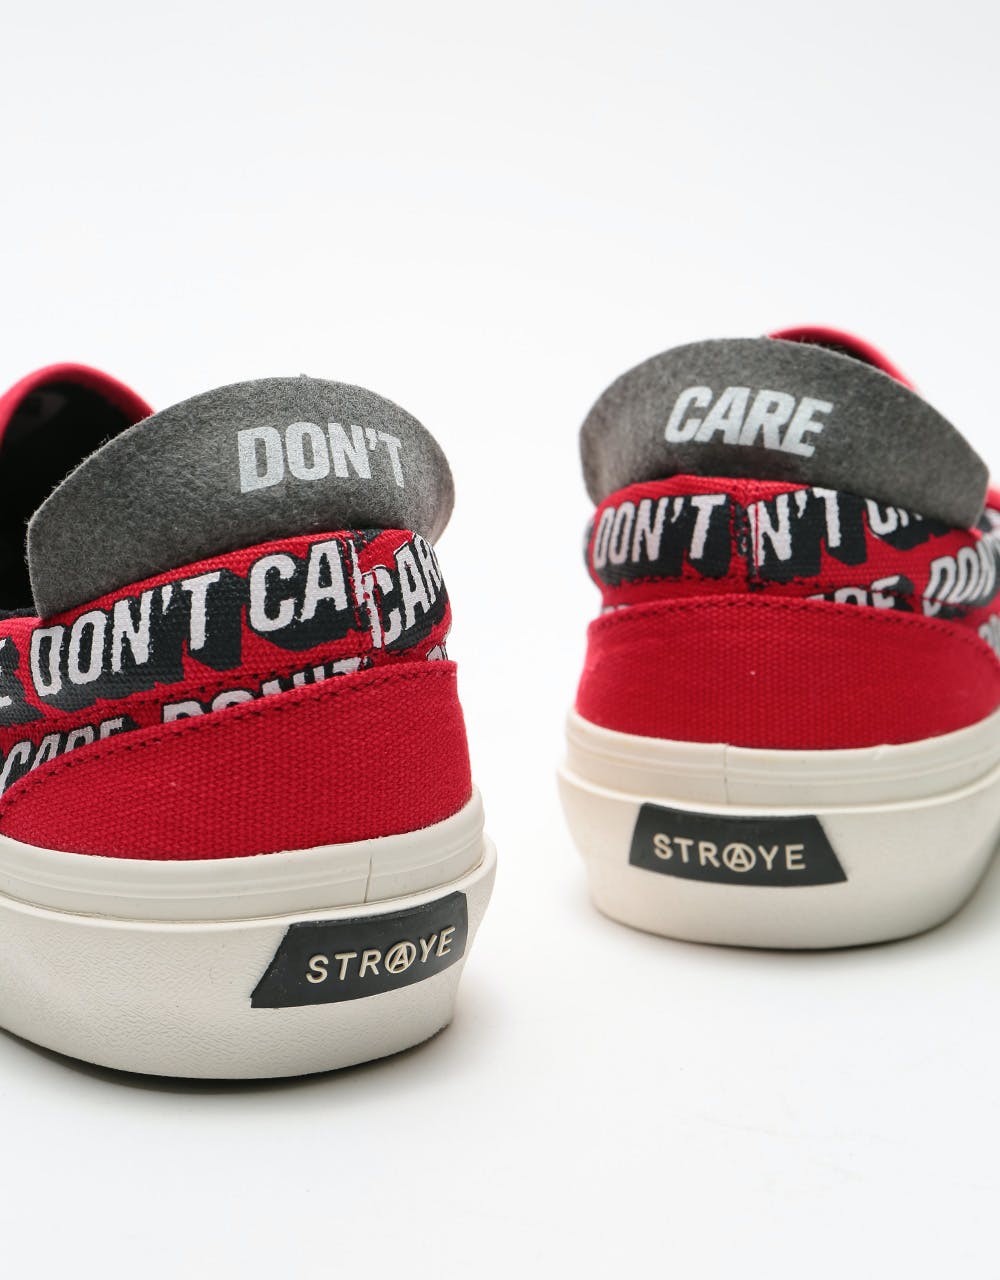 Straye Ventura Slip-On Skate Shoes - Don't Care